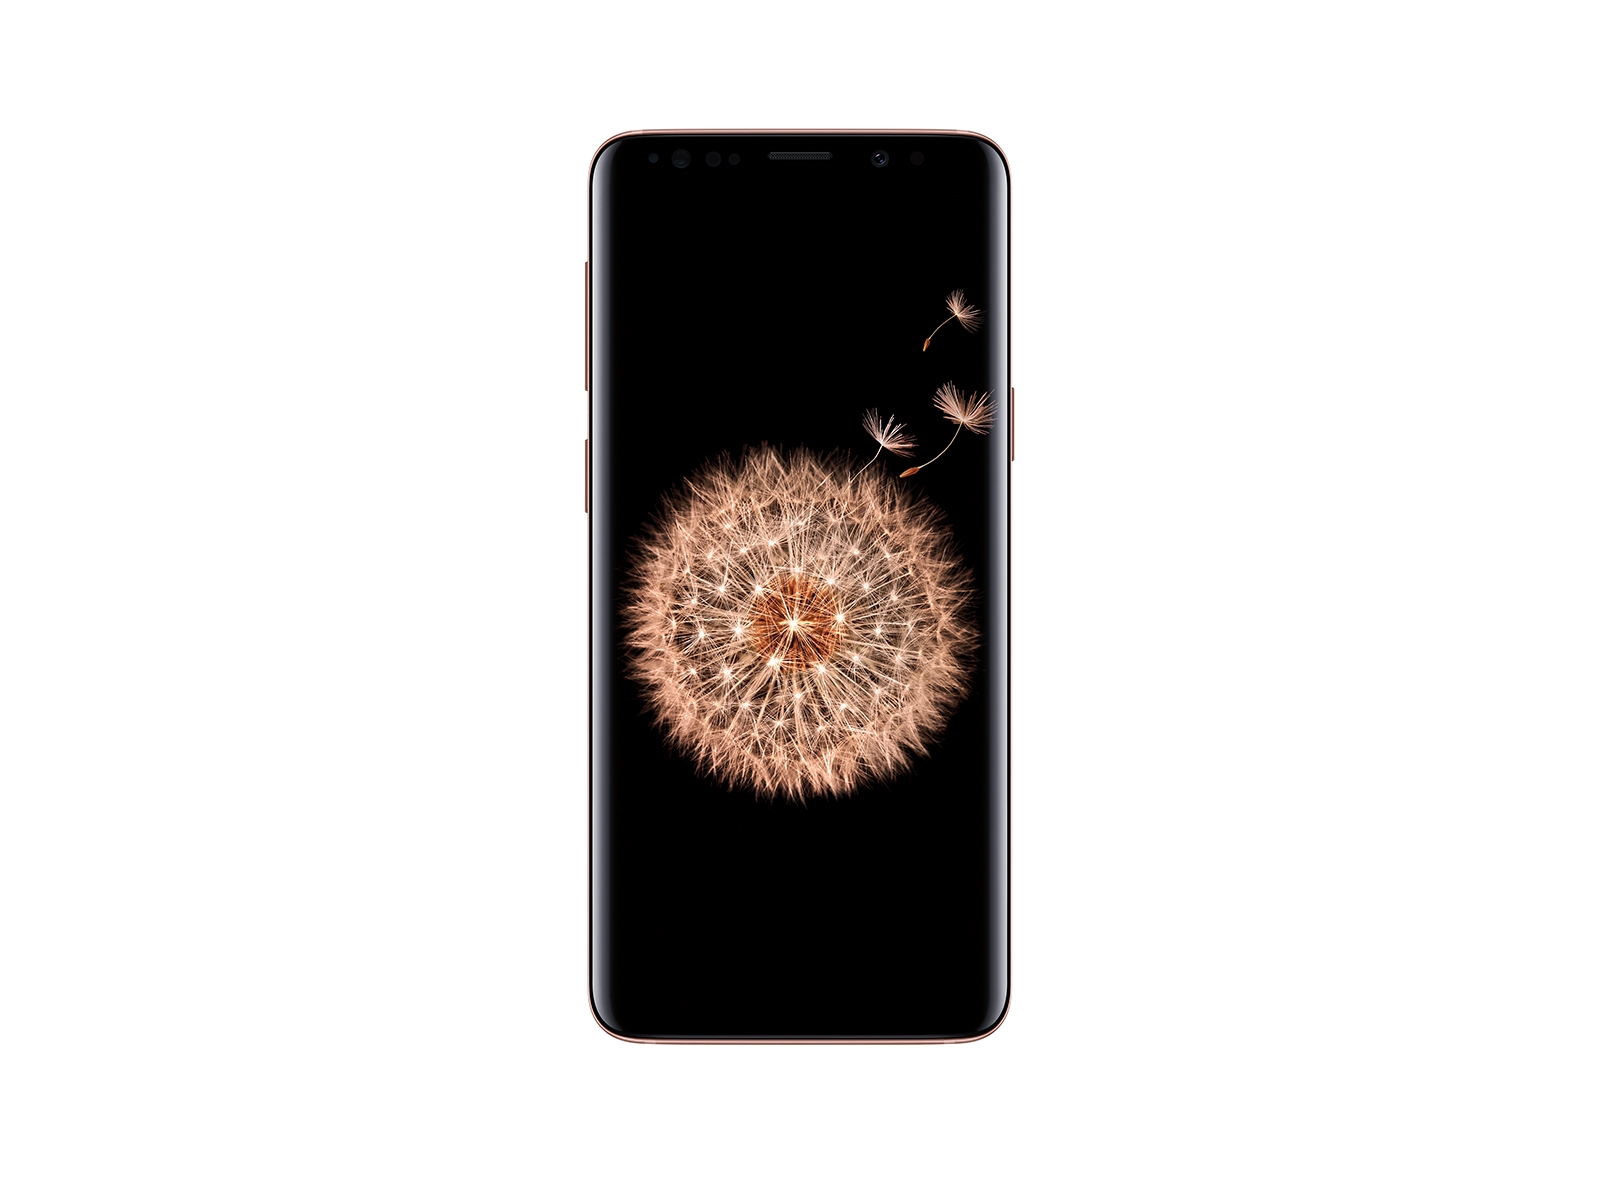 Thumbnail image of Galaxy S9 64GB (Unlocked)